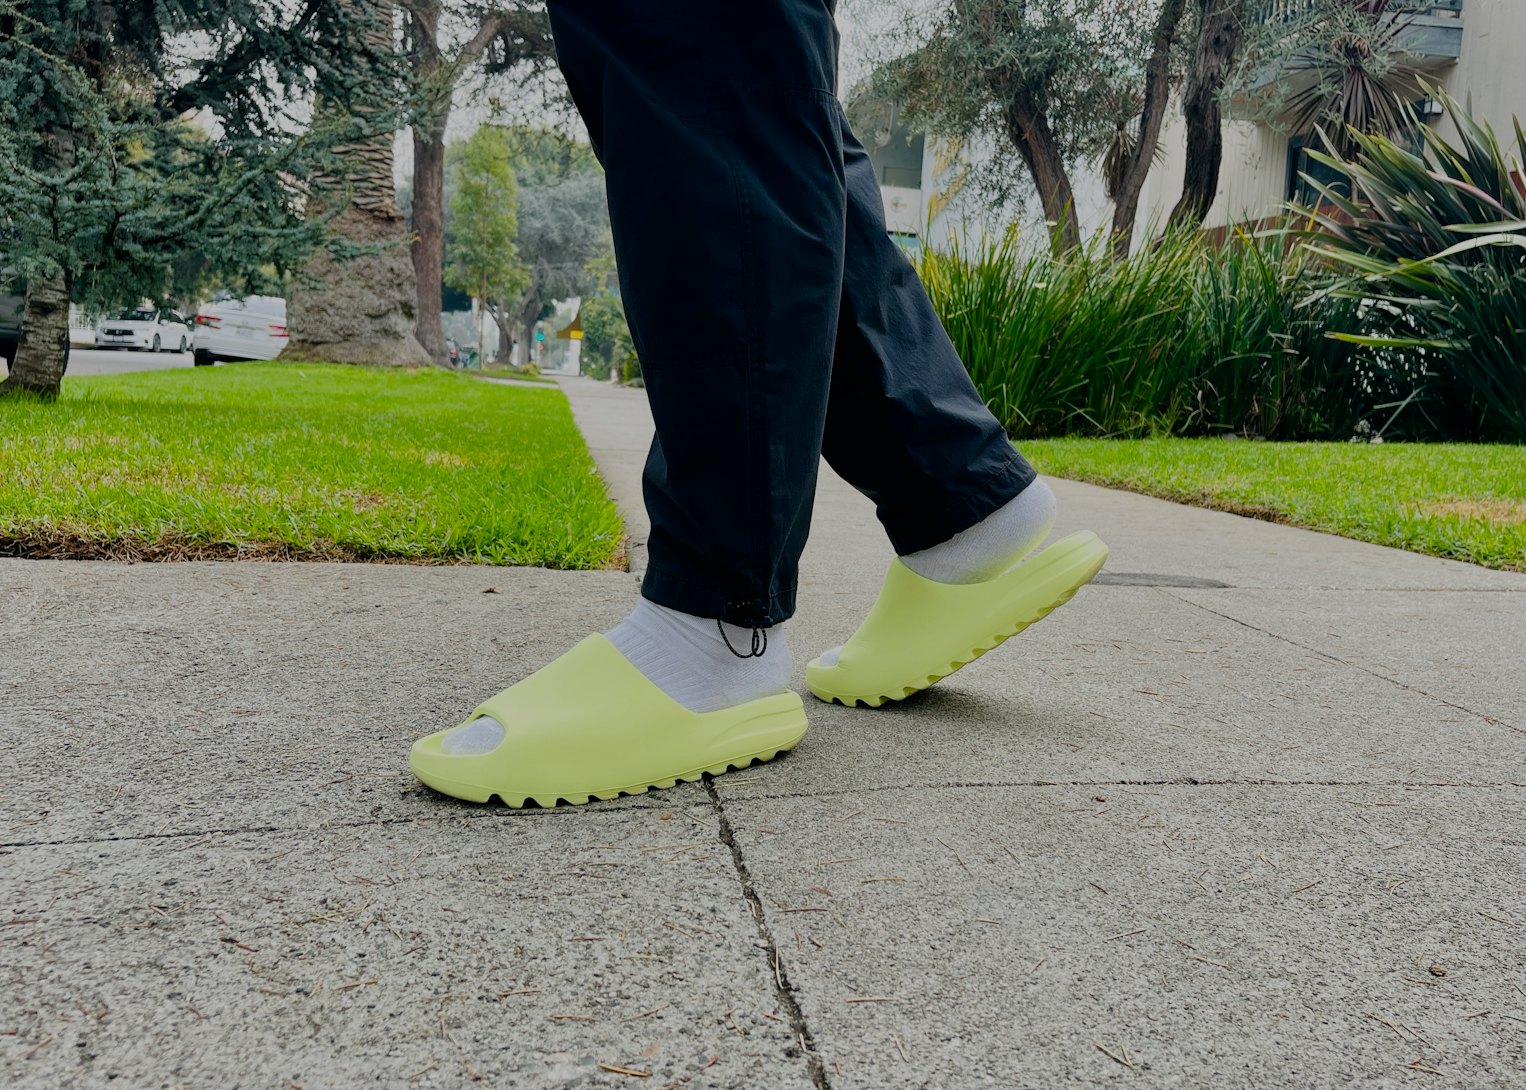 Adidas Yeezy Slides Sneakers